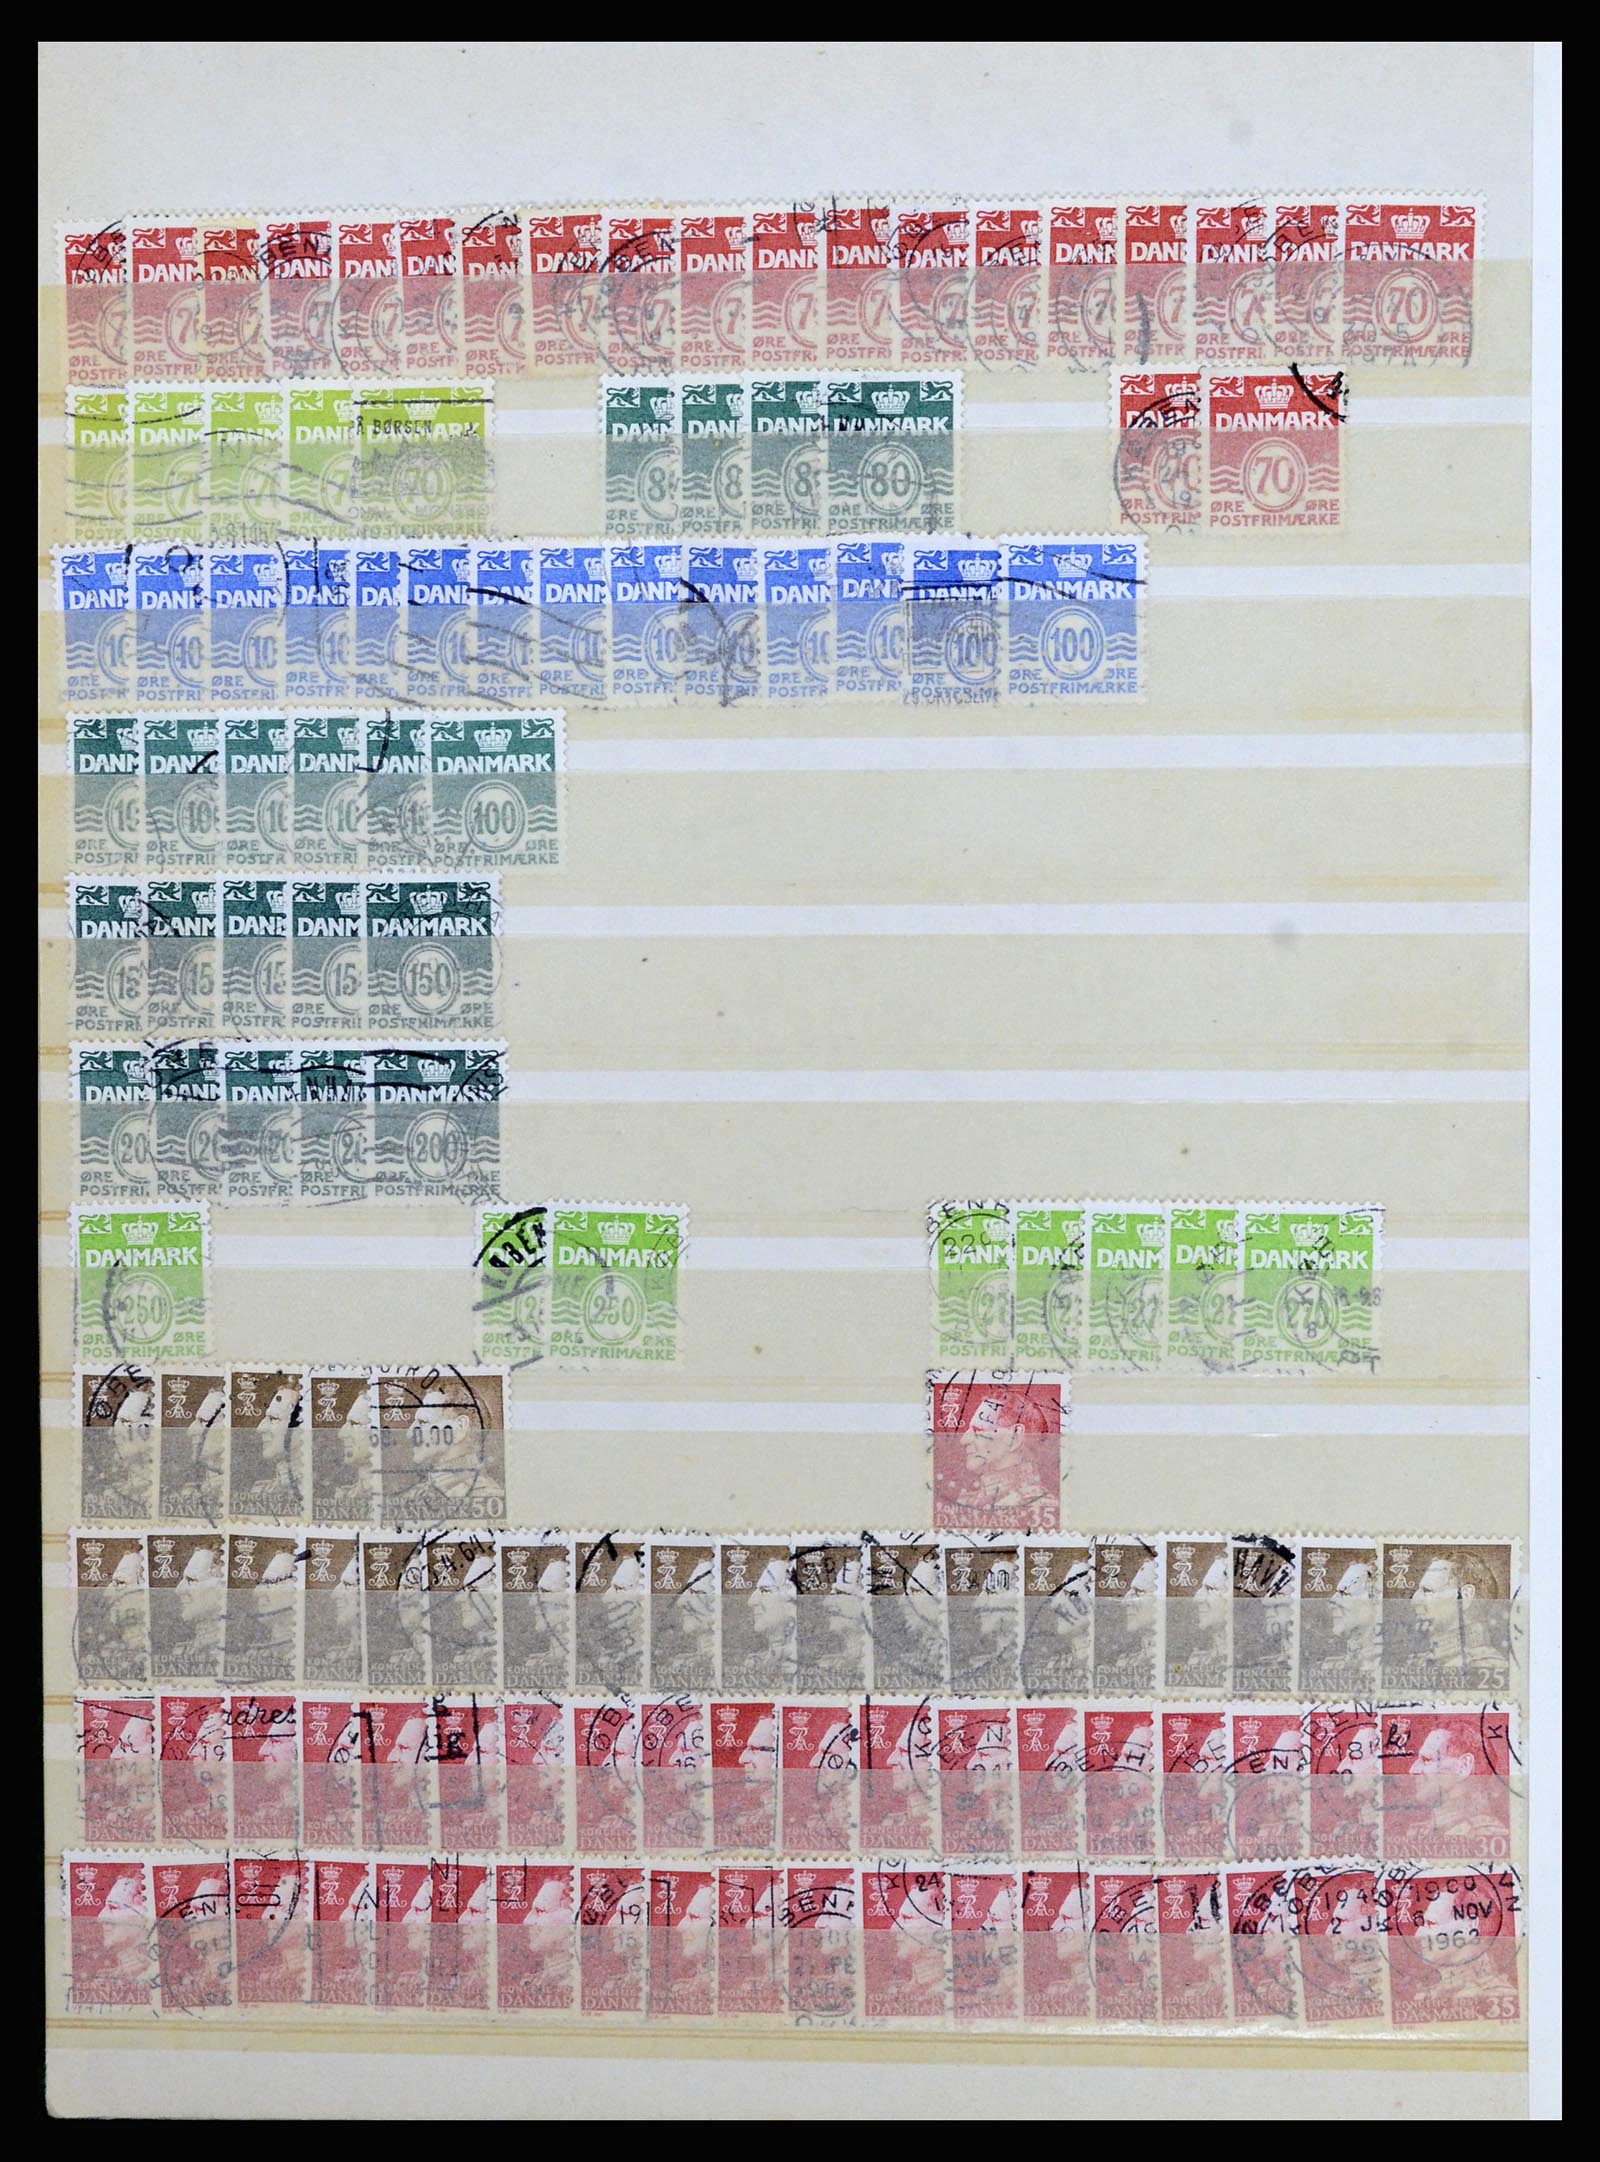 37056 031 - Stamp collection 37056 Denmark perfins.